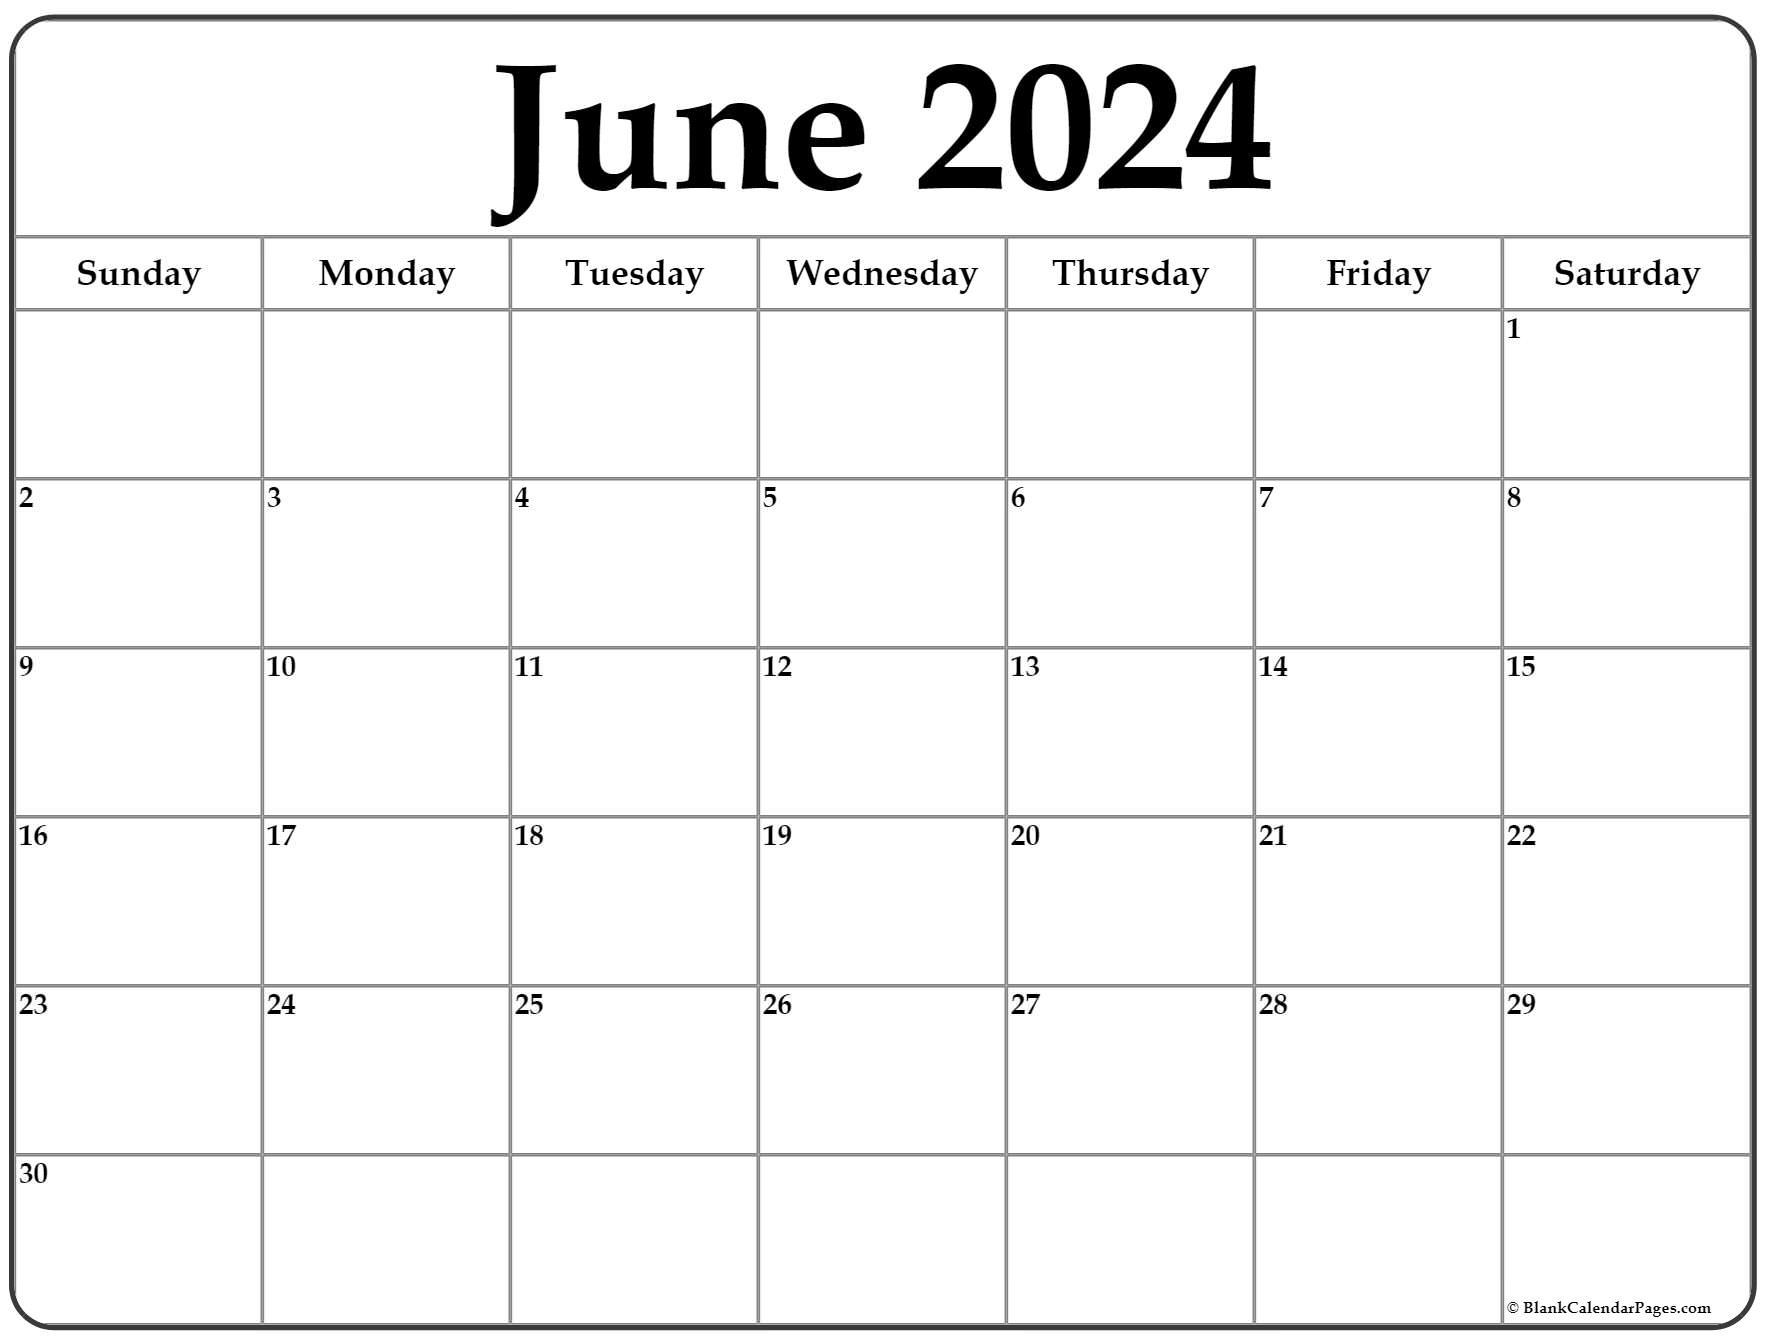 June 2024 Calendar | Free Printable Calendar within Free Printable Calend June 2024